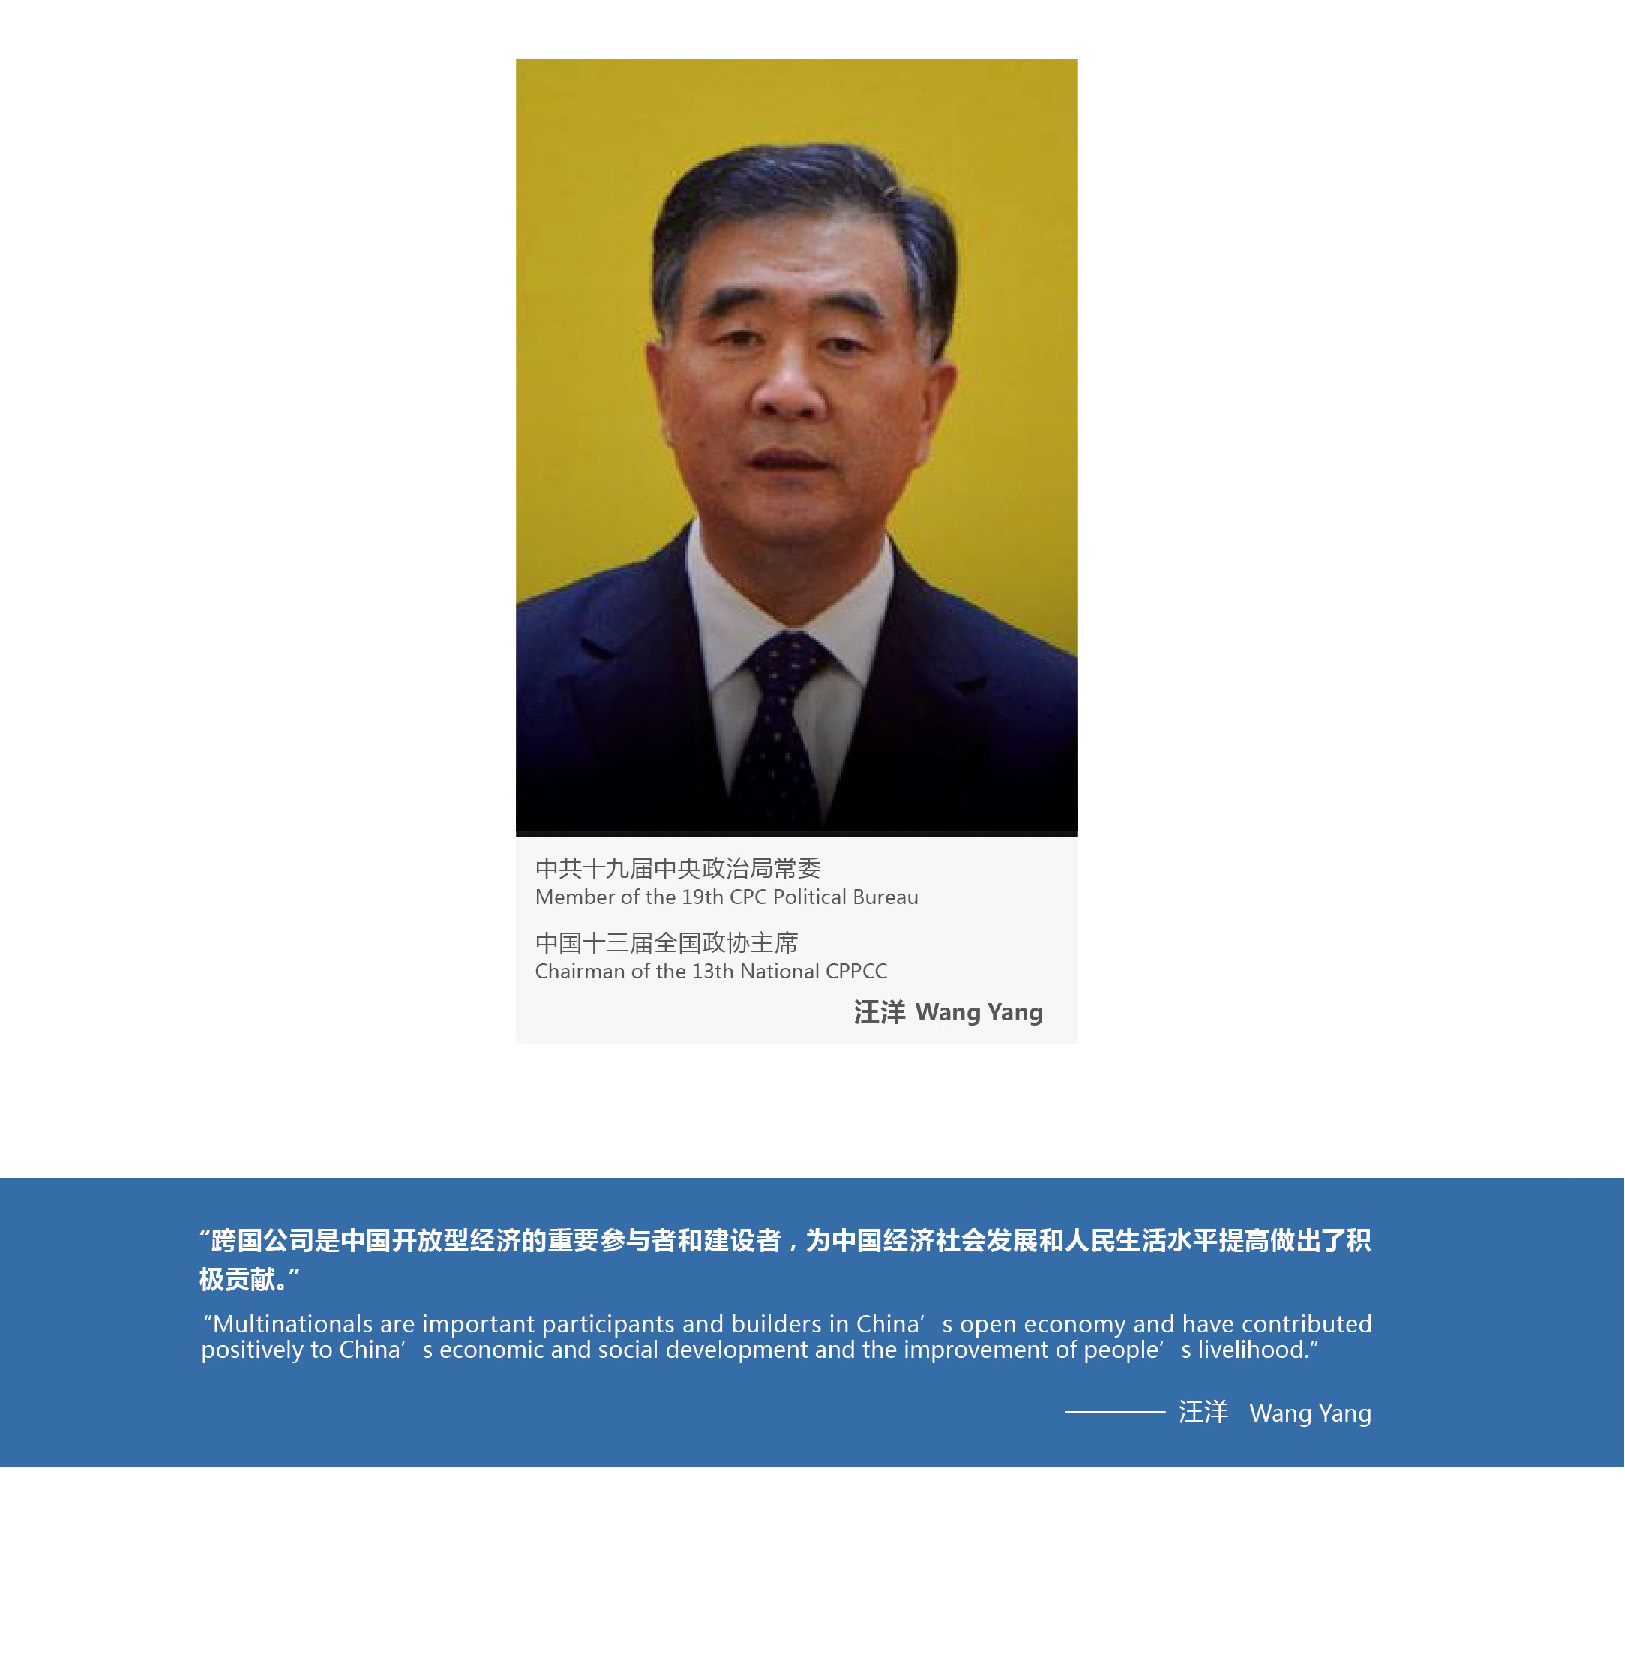 Speech by Mr. Wang Yang at the Symposium of Multinational Corporation Representatives